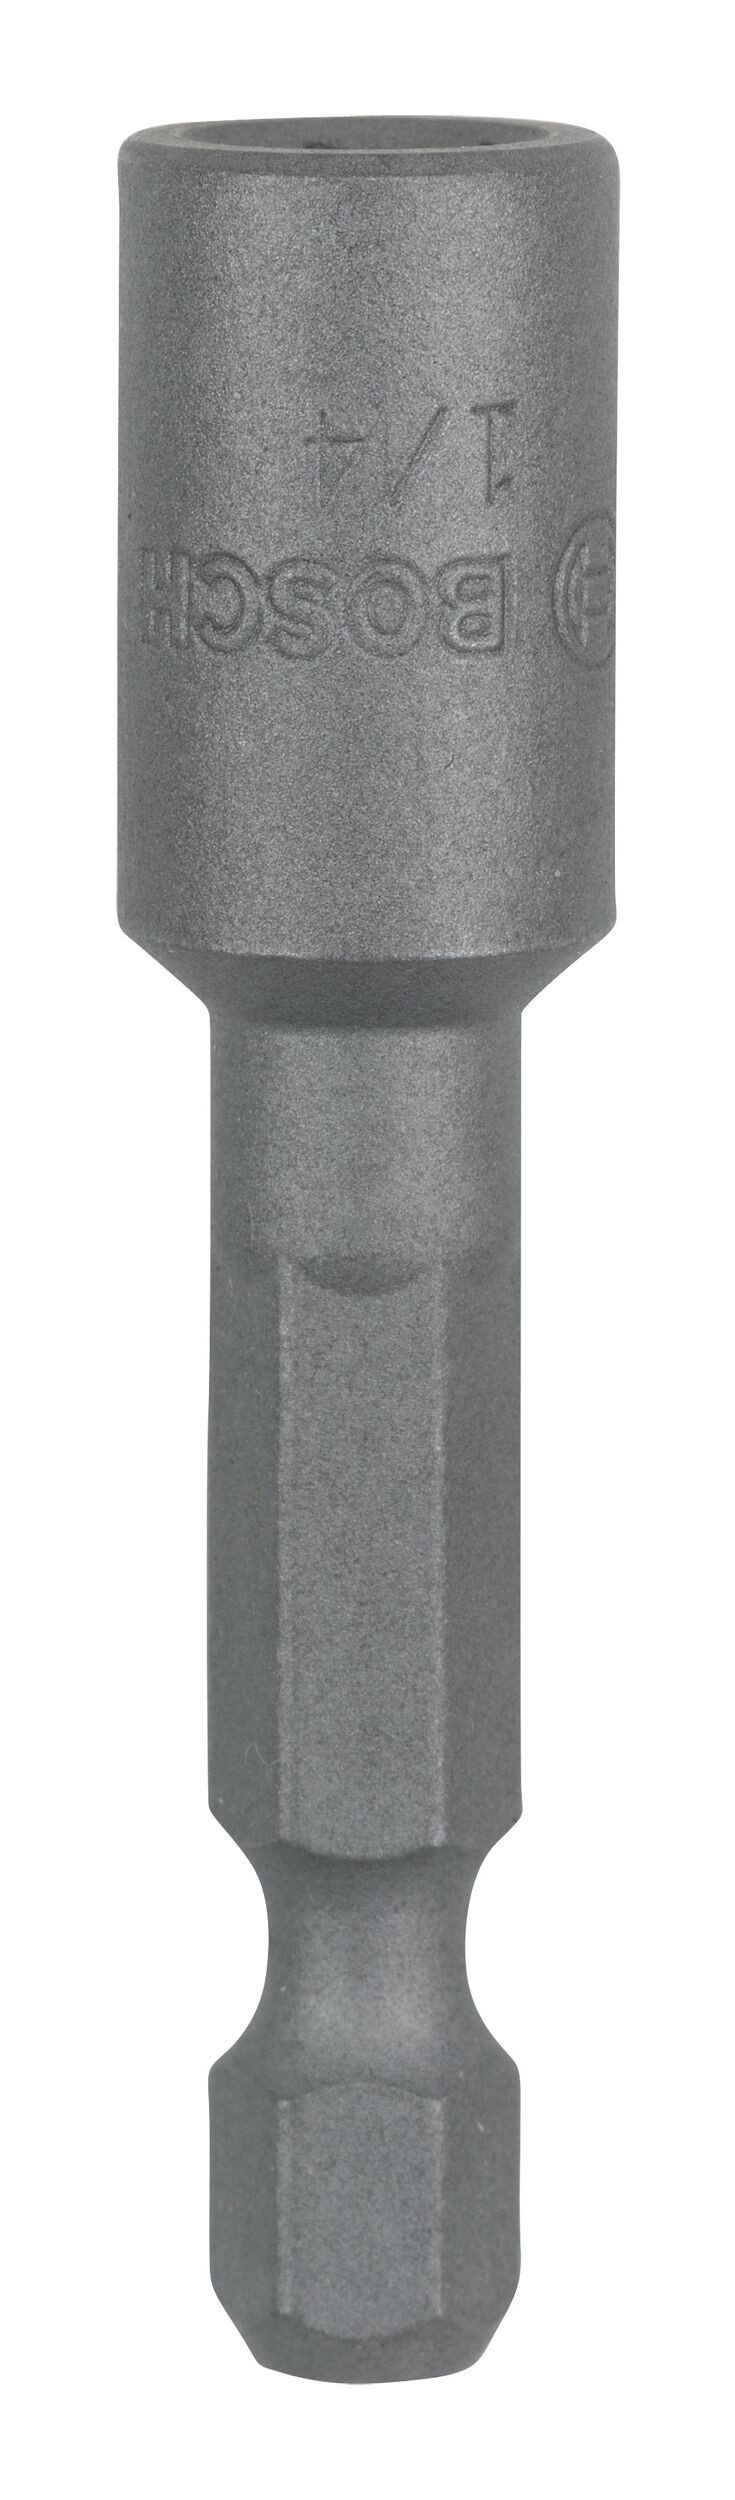 BOSCH Stecknuss, Steckschlüssel mit Magnet - 50 mm x 1/4"